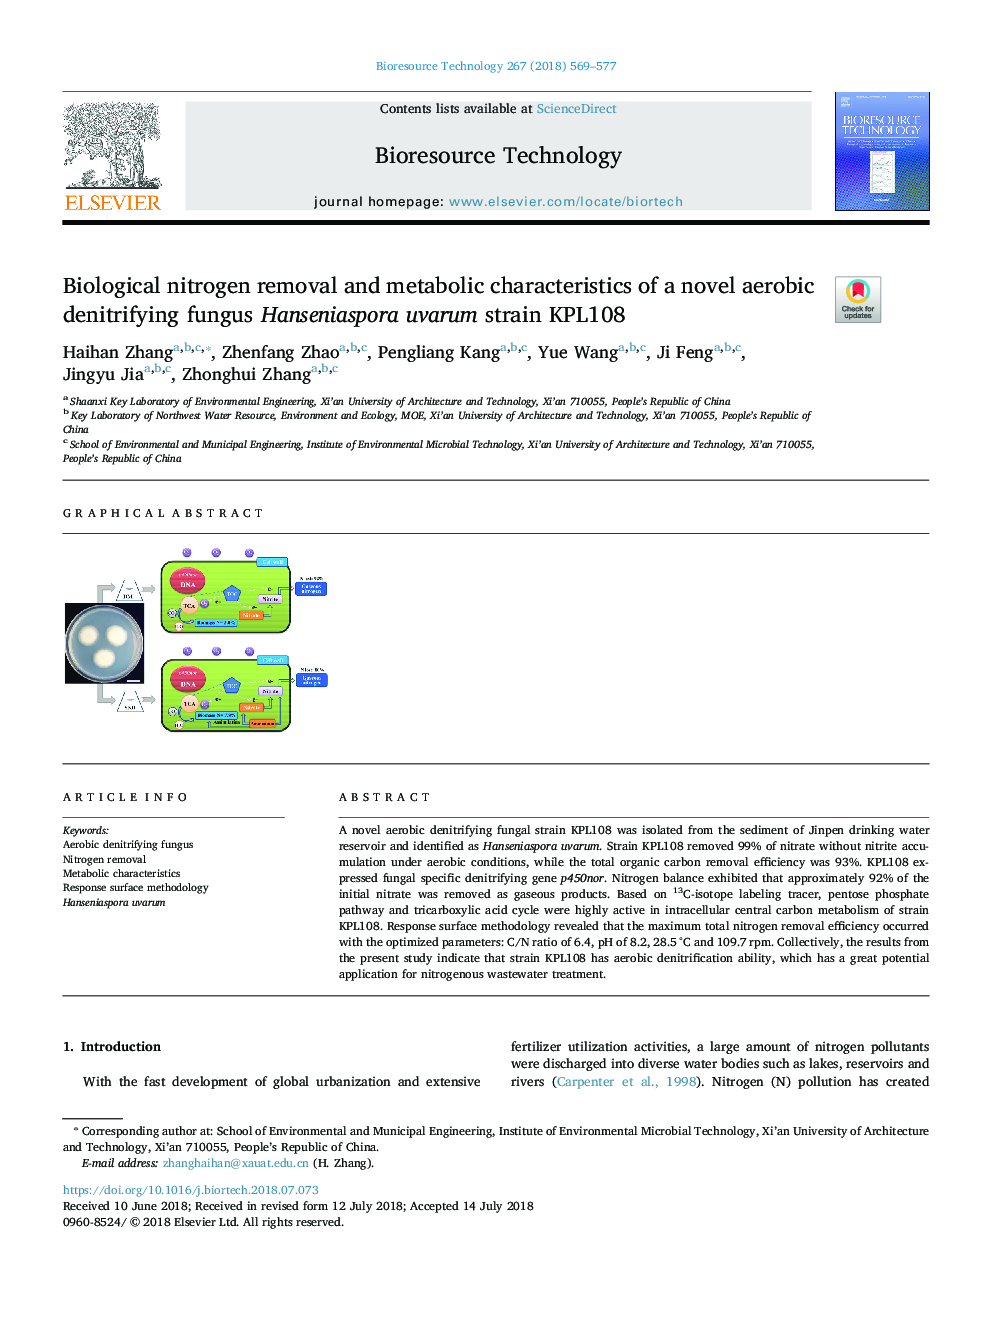 Biological nitrogen removal and metabolic characteristics of a novel aerobic denitrifying fungus Hanseniaspora uvarum strain KPL108